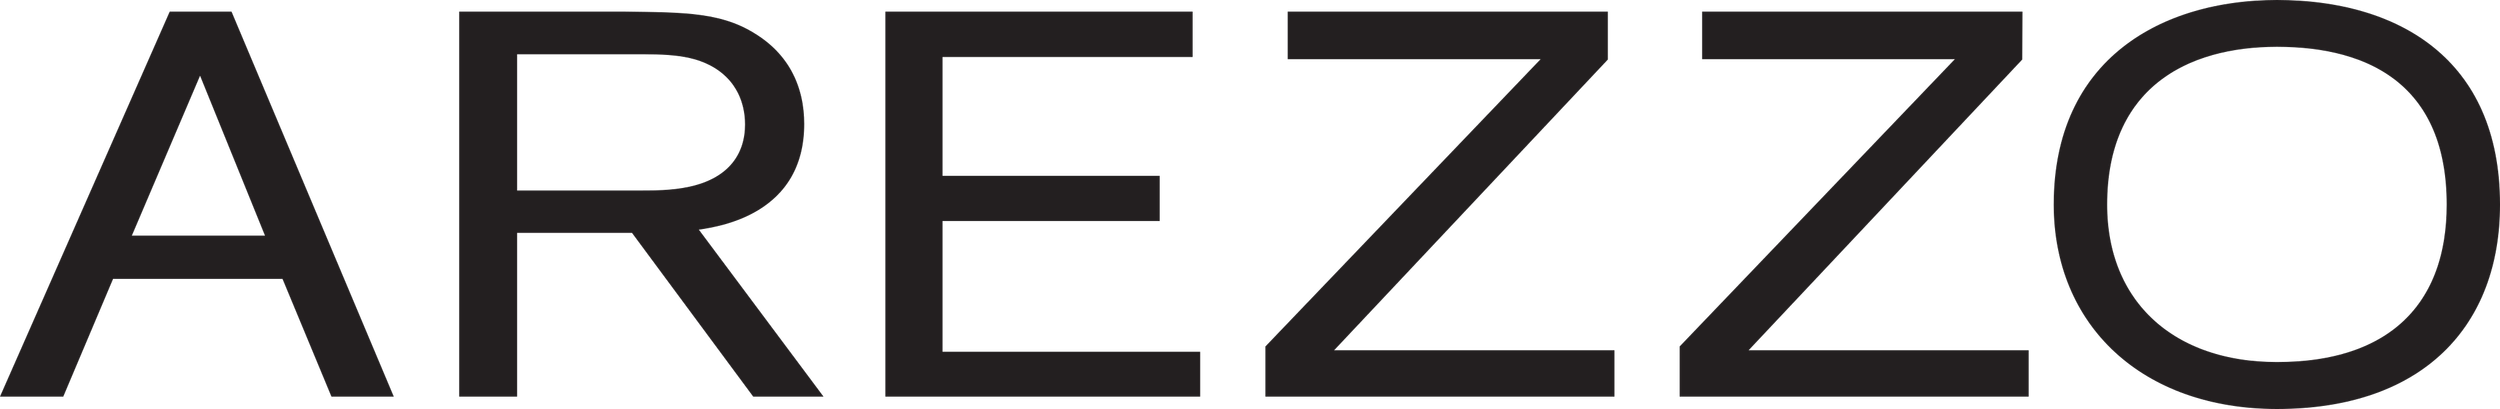 arezzo-logo.png